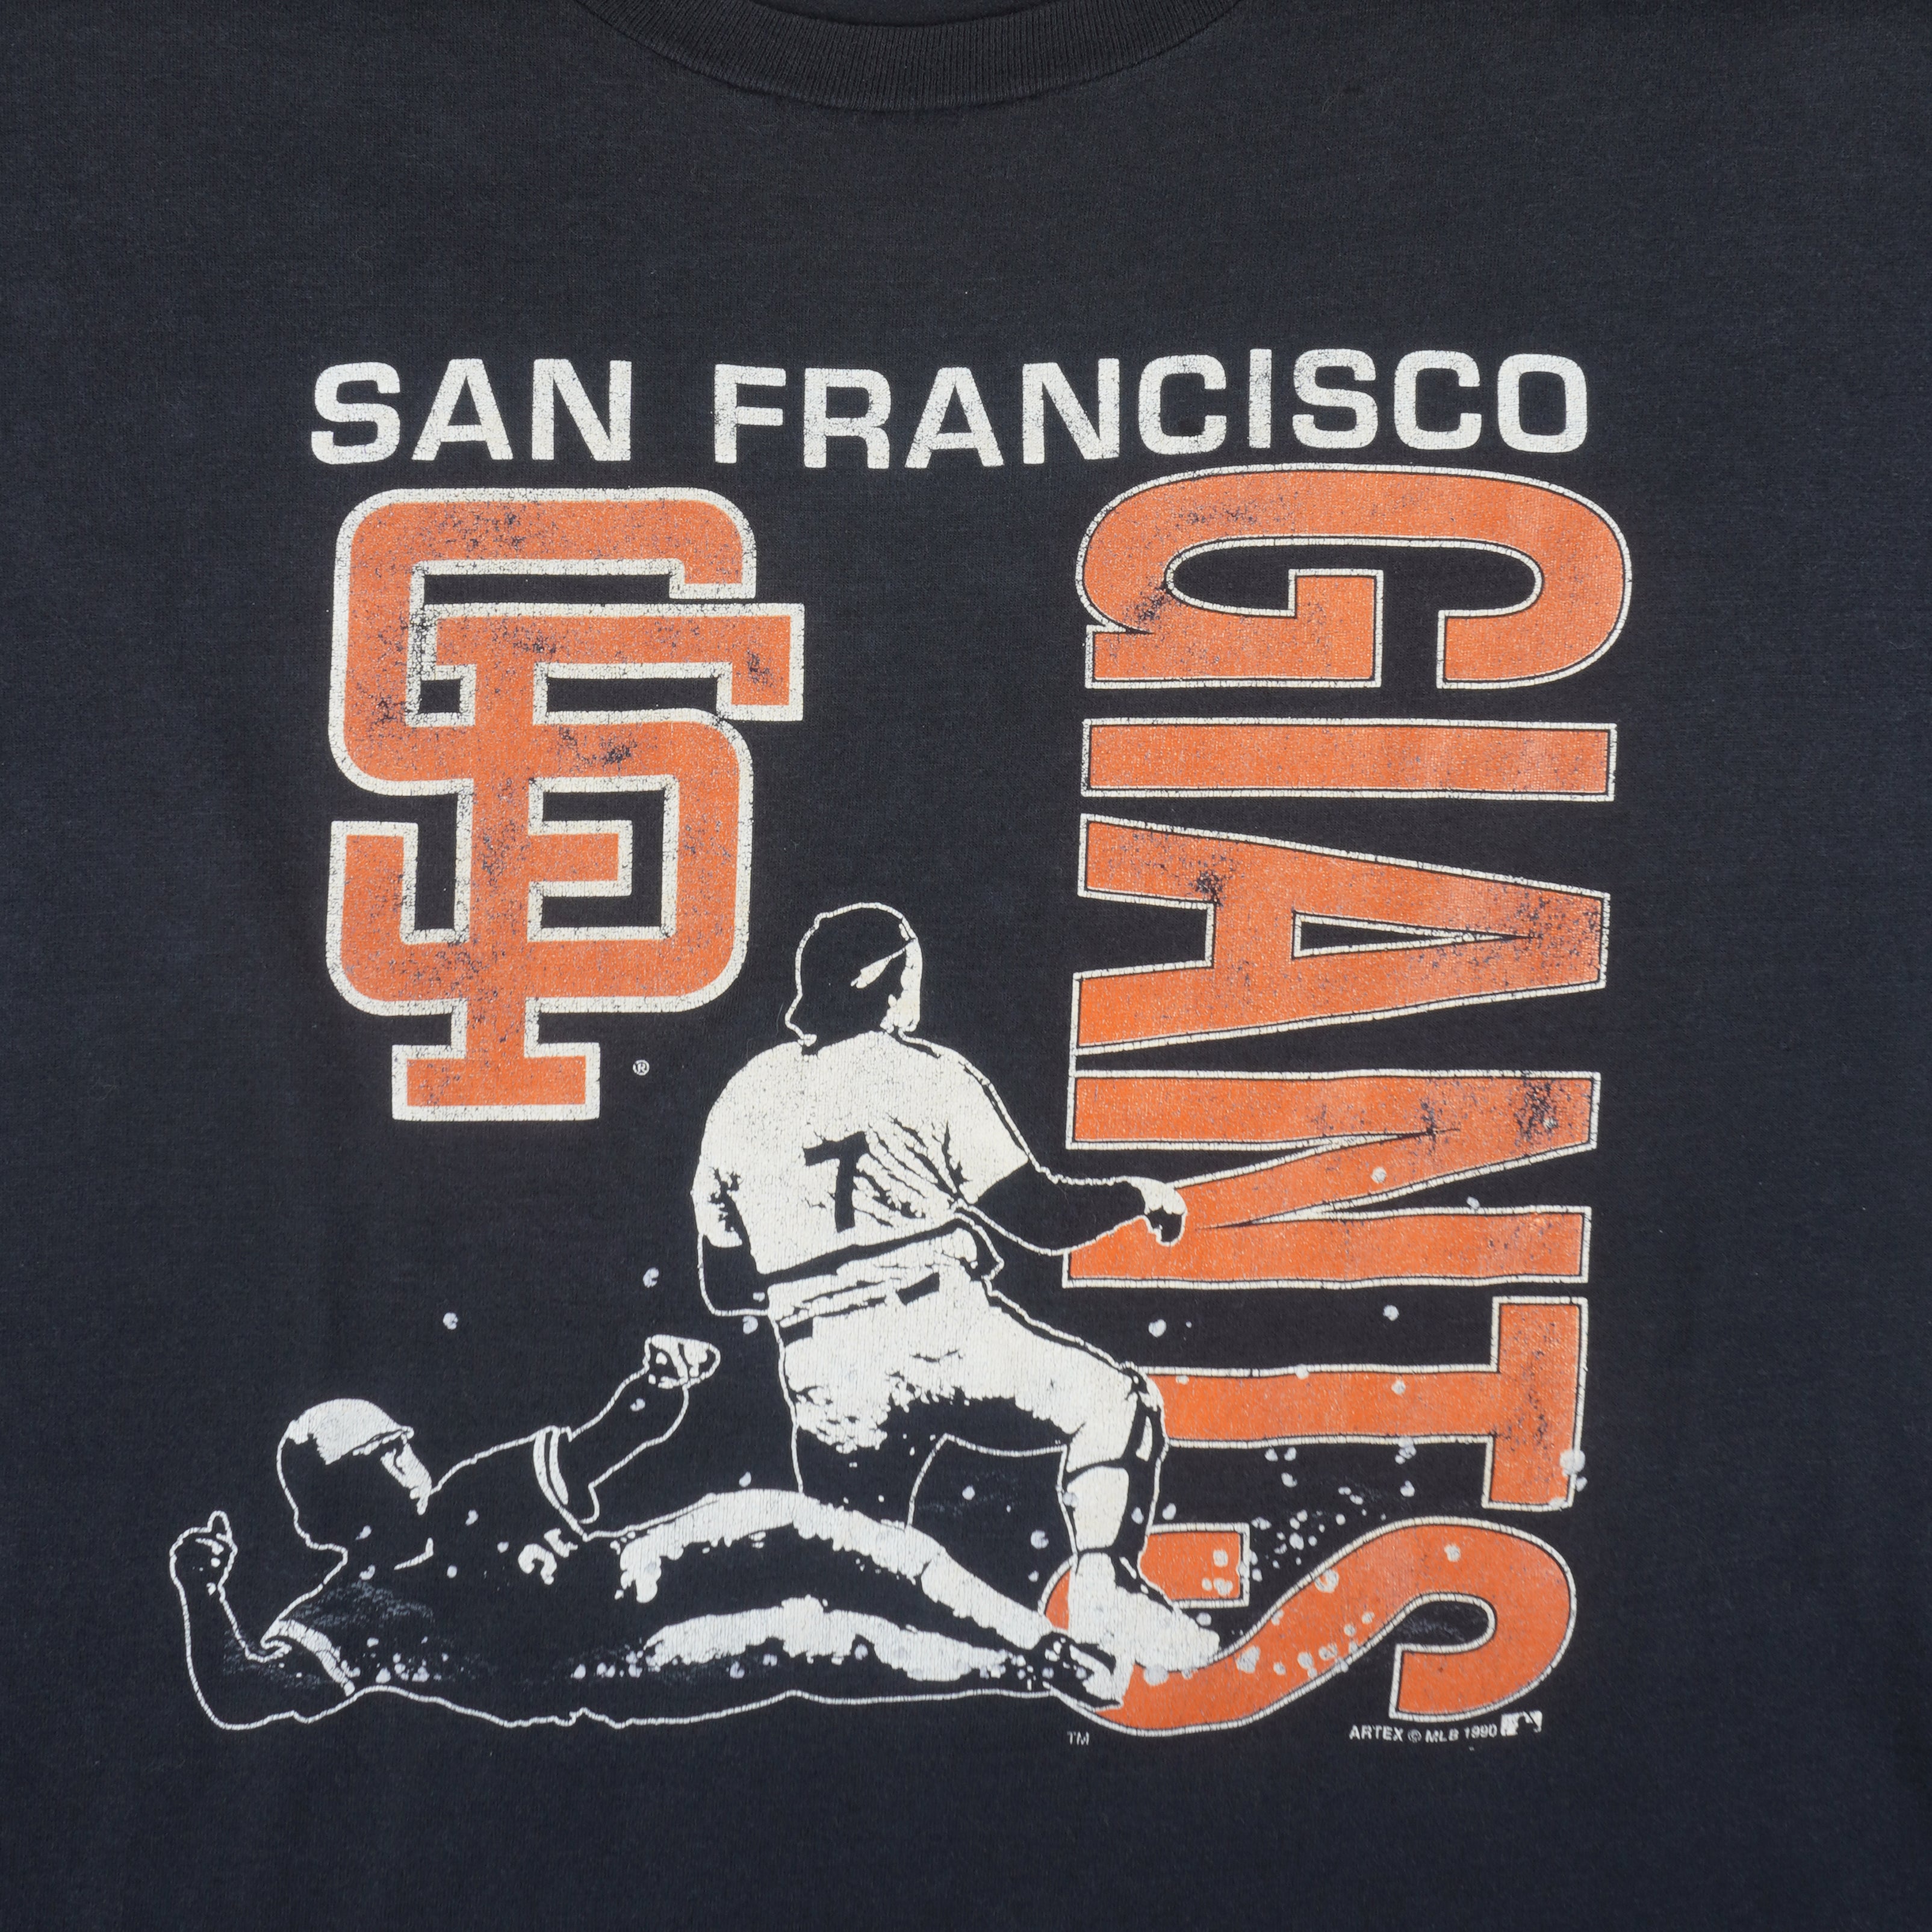 San Francisco Giants baseball shirt Majestic Size M